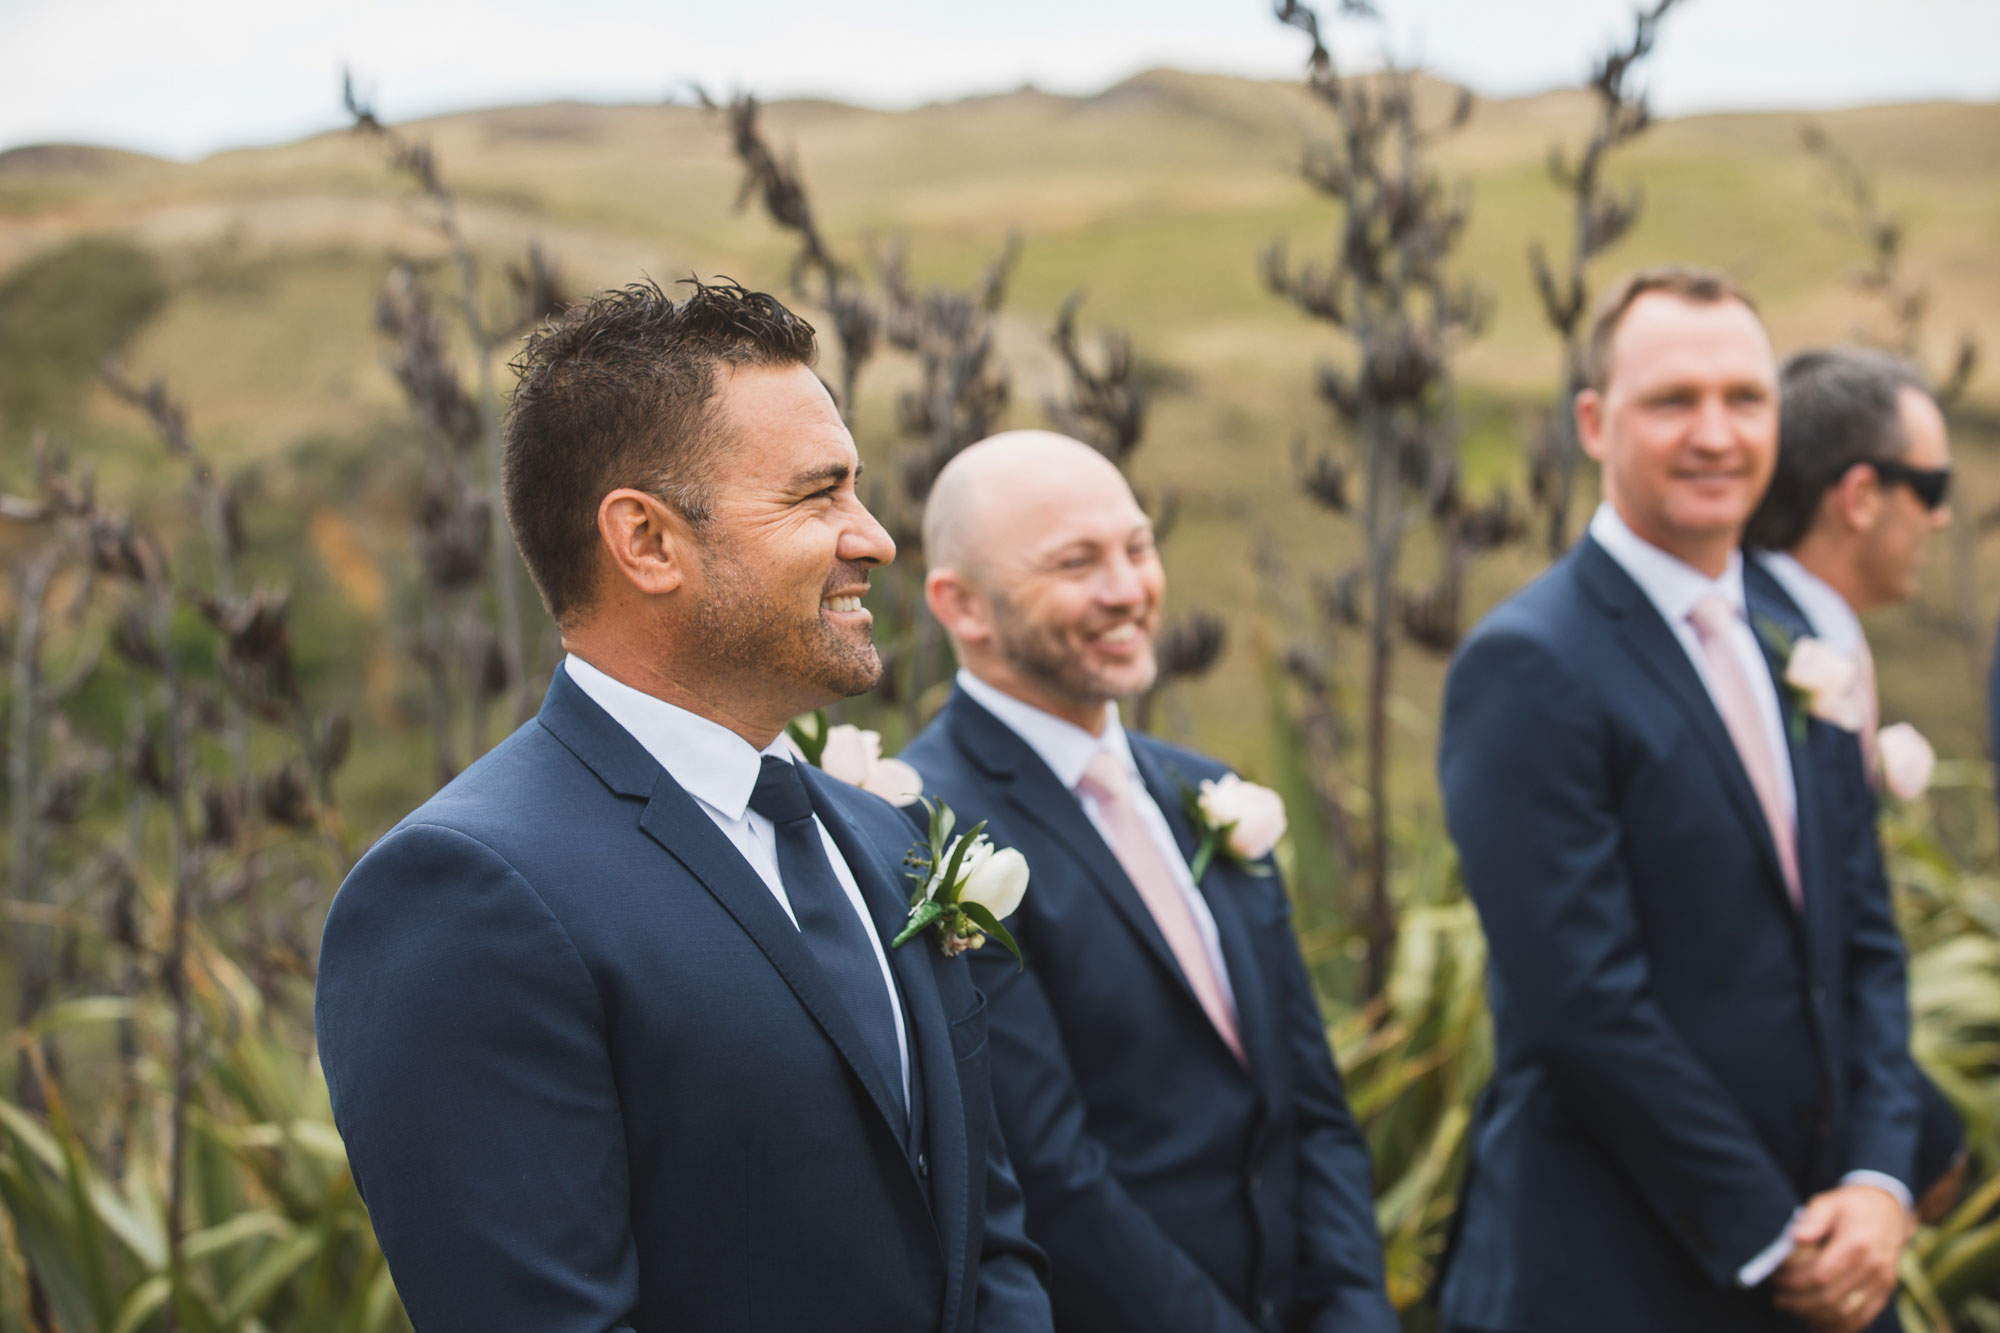 auckland castaways wedding groom laughing